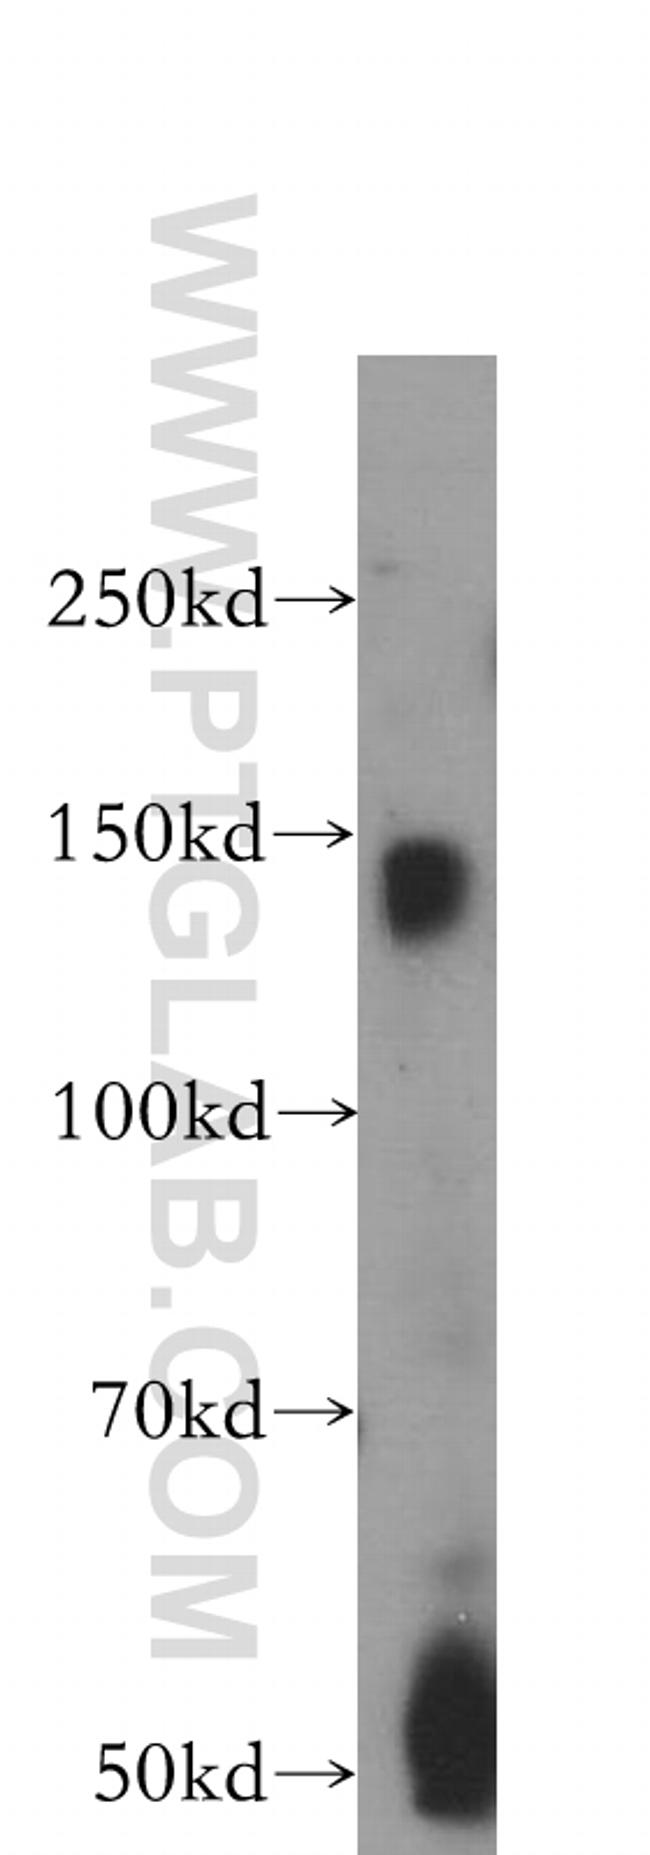 BMPR2 Antibody in Western Blot (WB)